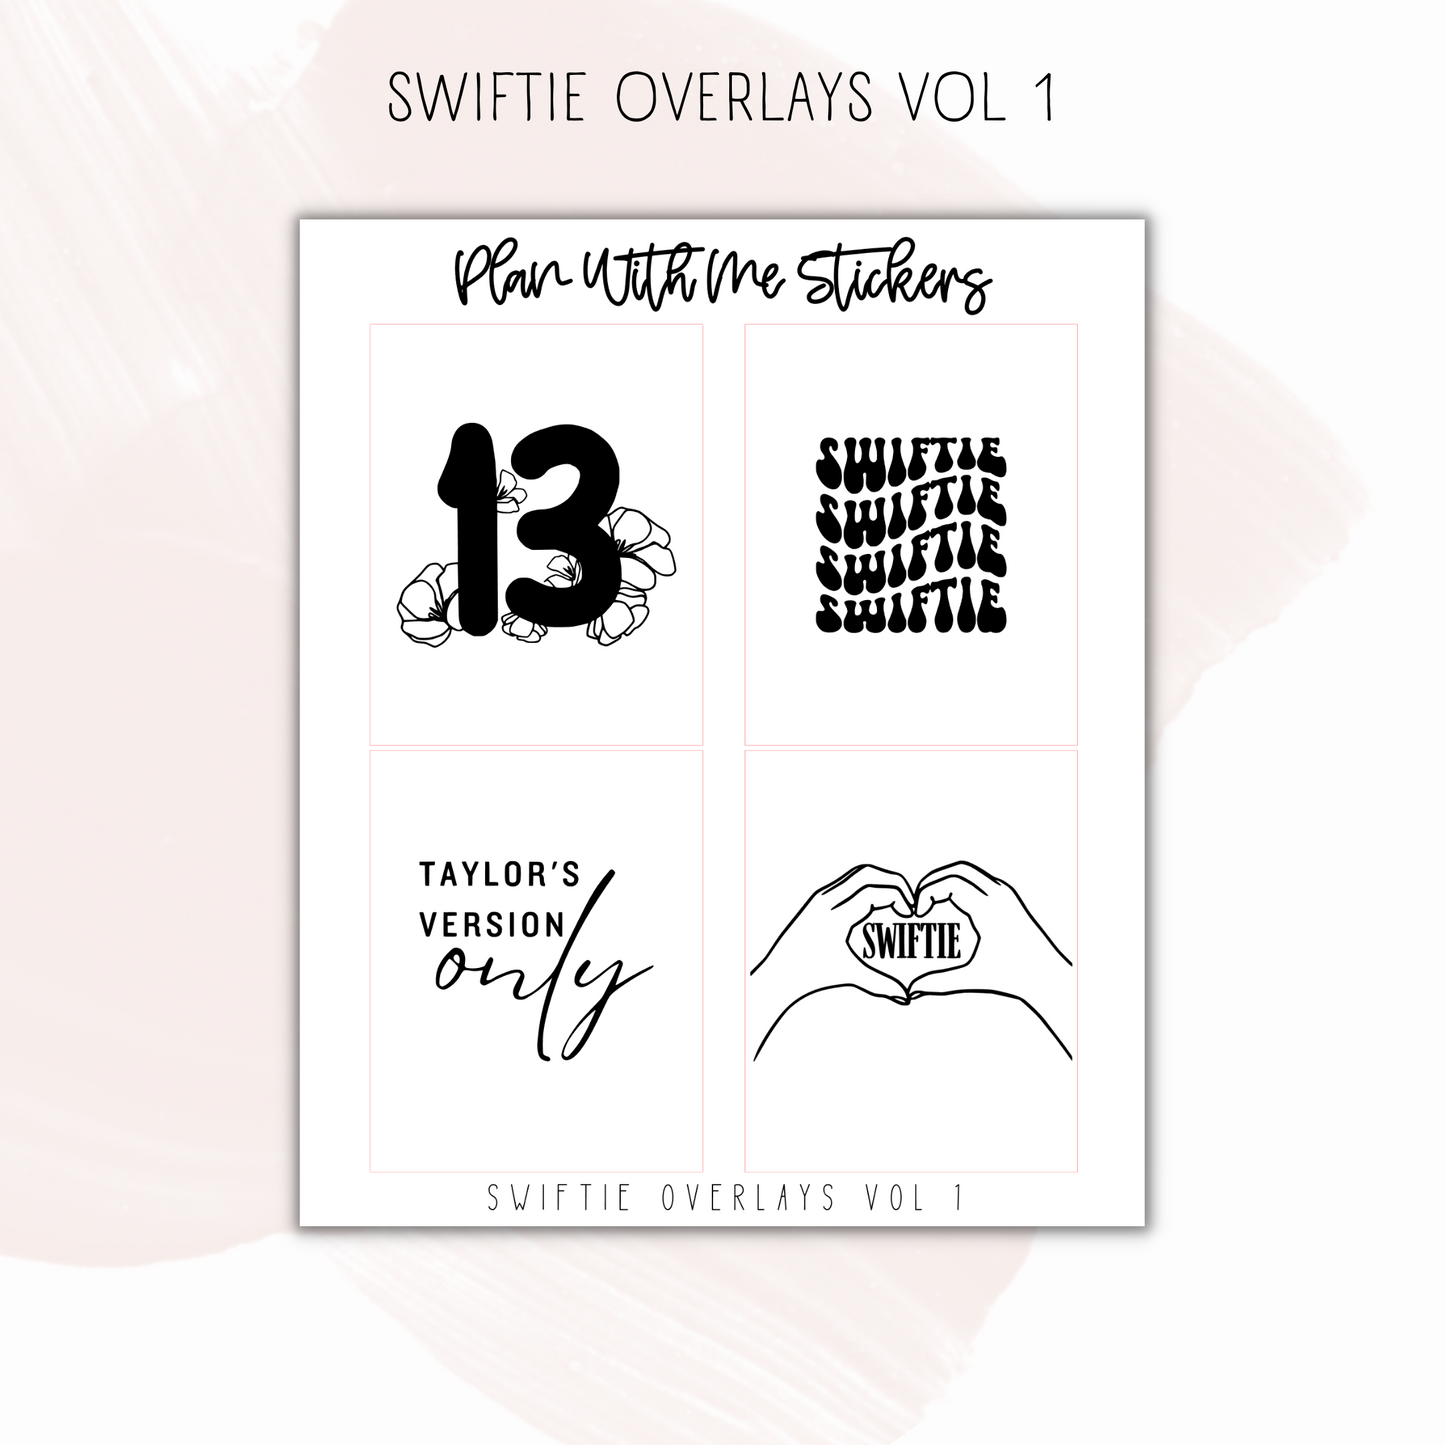 Swiftie Overlays Vol 1